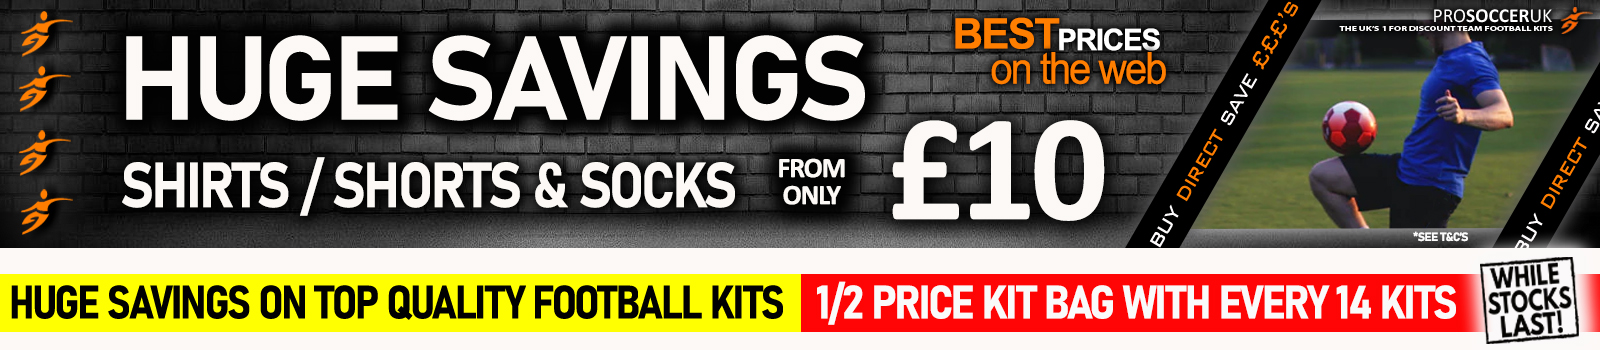 Cheap Football Kits Now £10